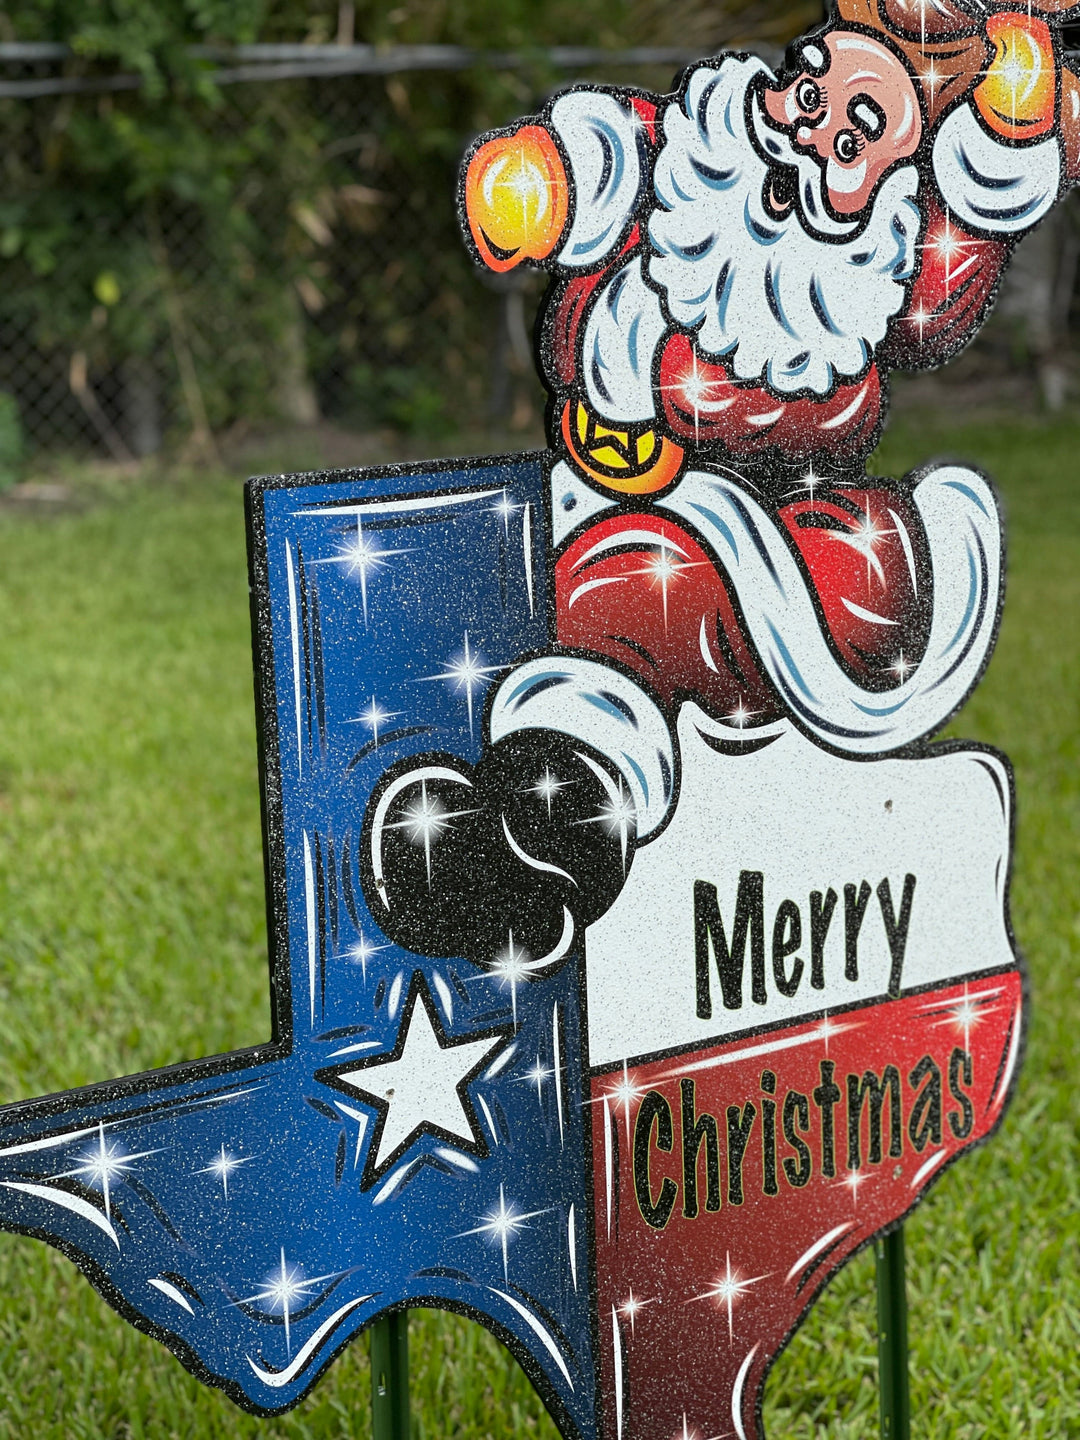 Christmas Santa Clause on Texas Yard Decoration